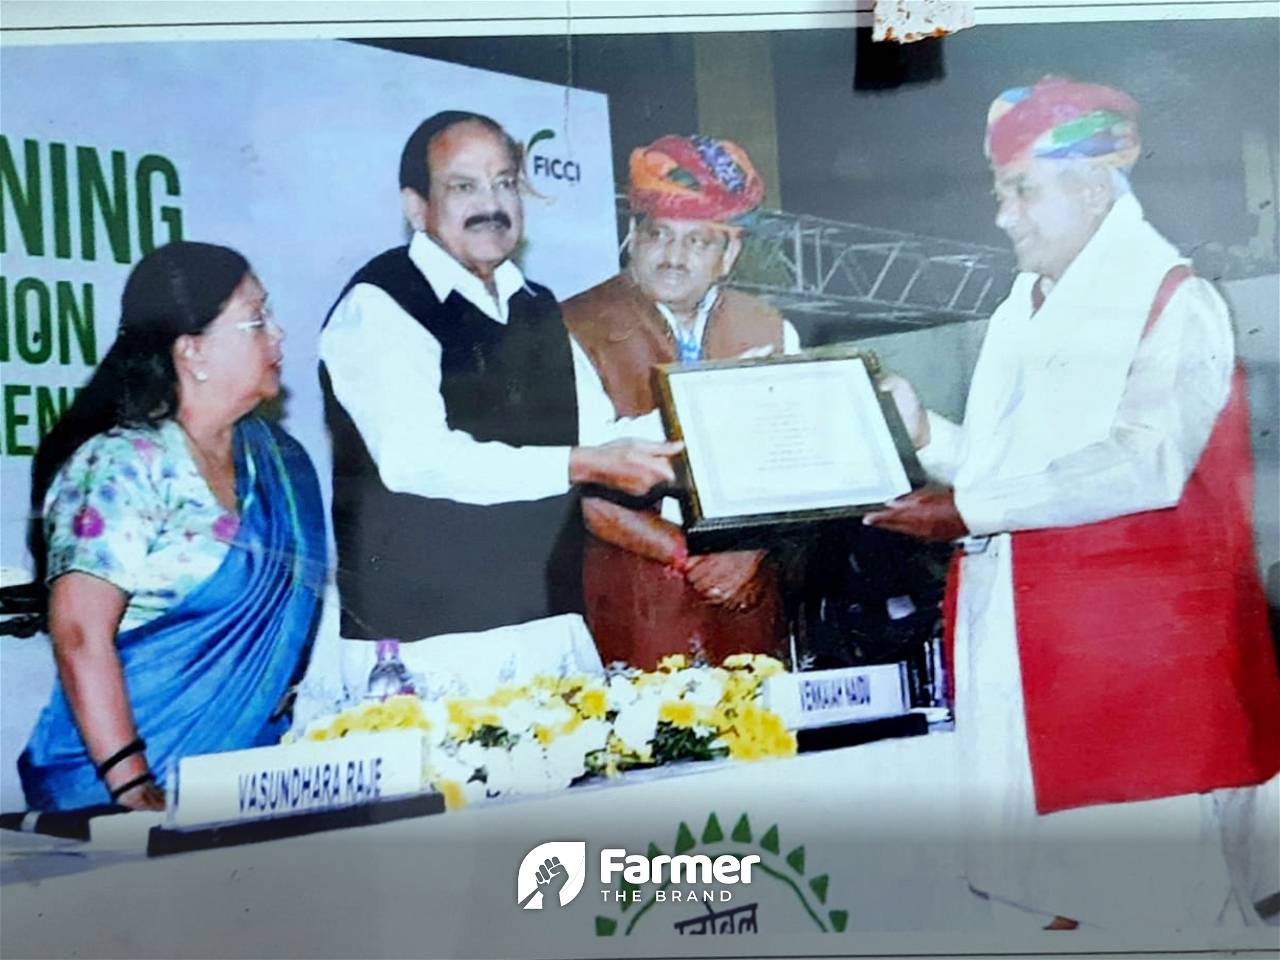 Farmer receiving award